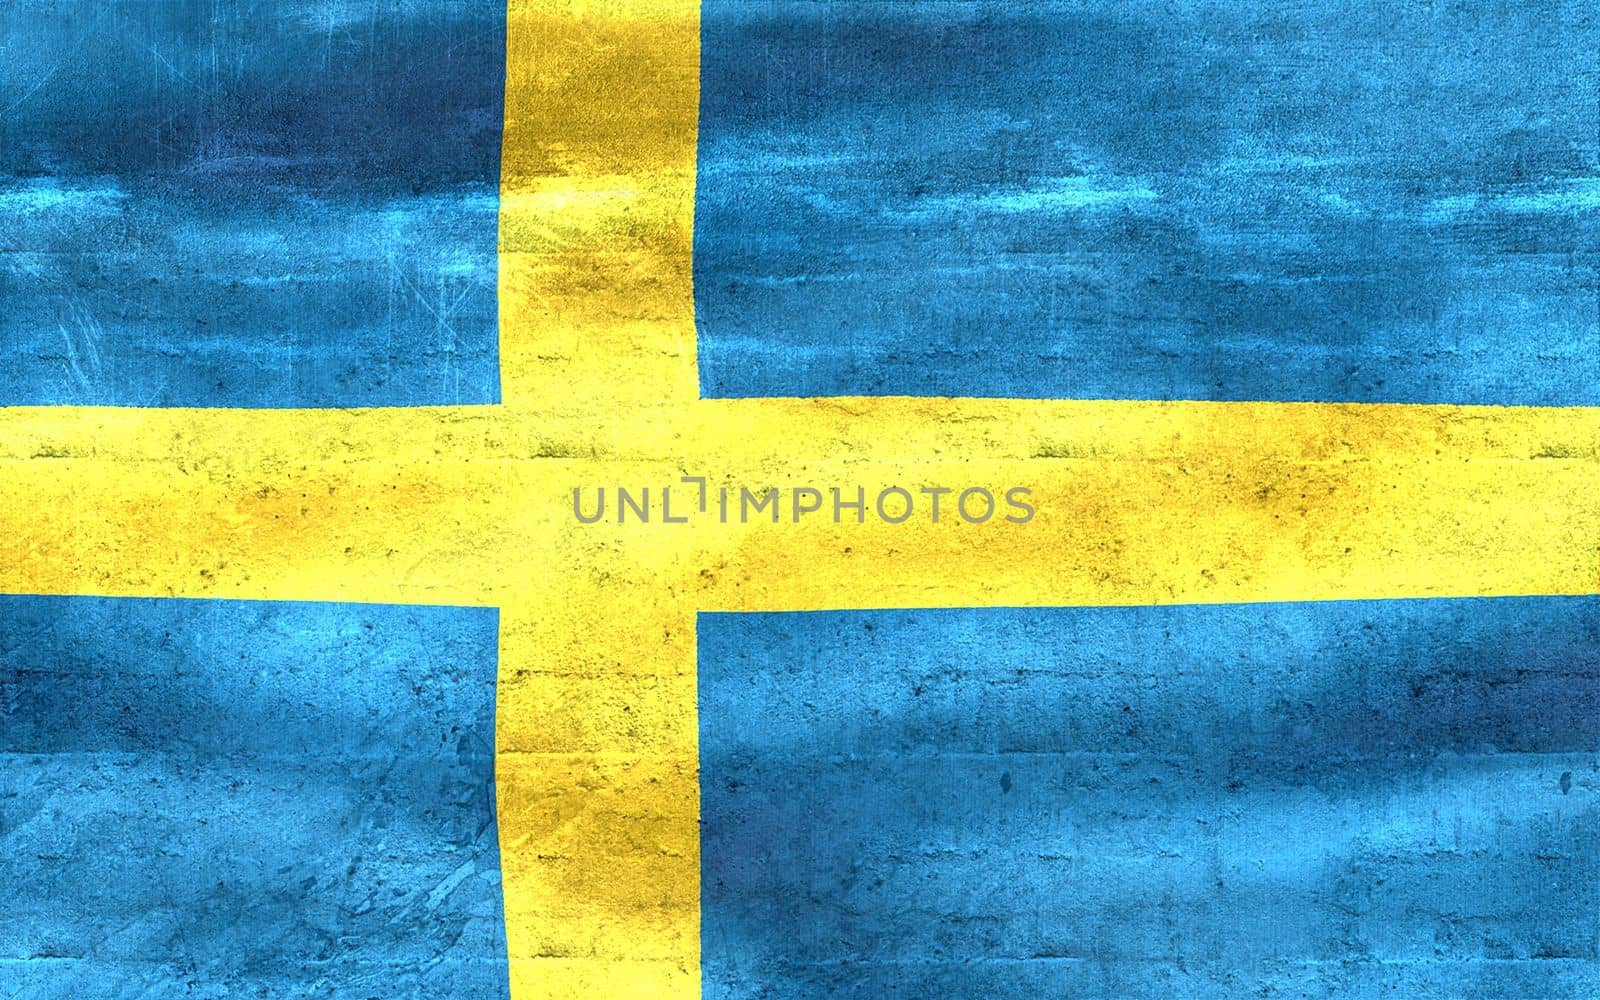 Sweden flag - realistic waving fabric flag